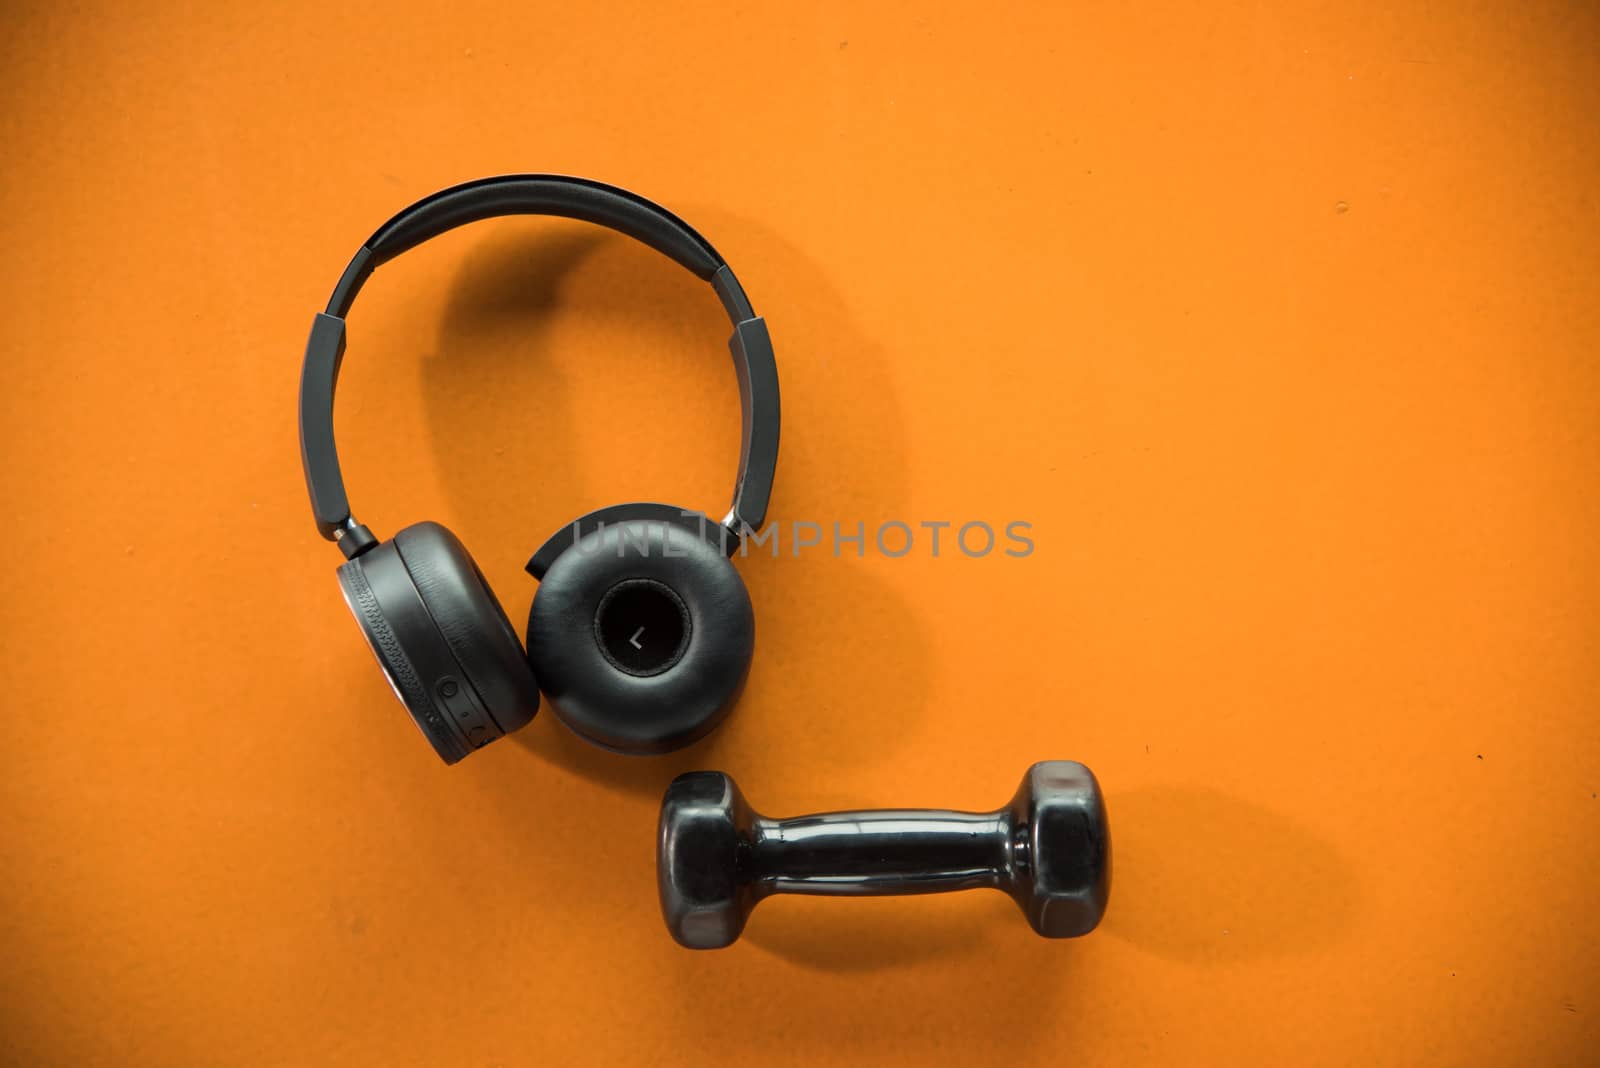 Music headphones and dumbbell on orange rubber floor in fitness gym